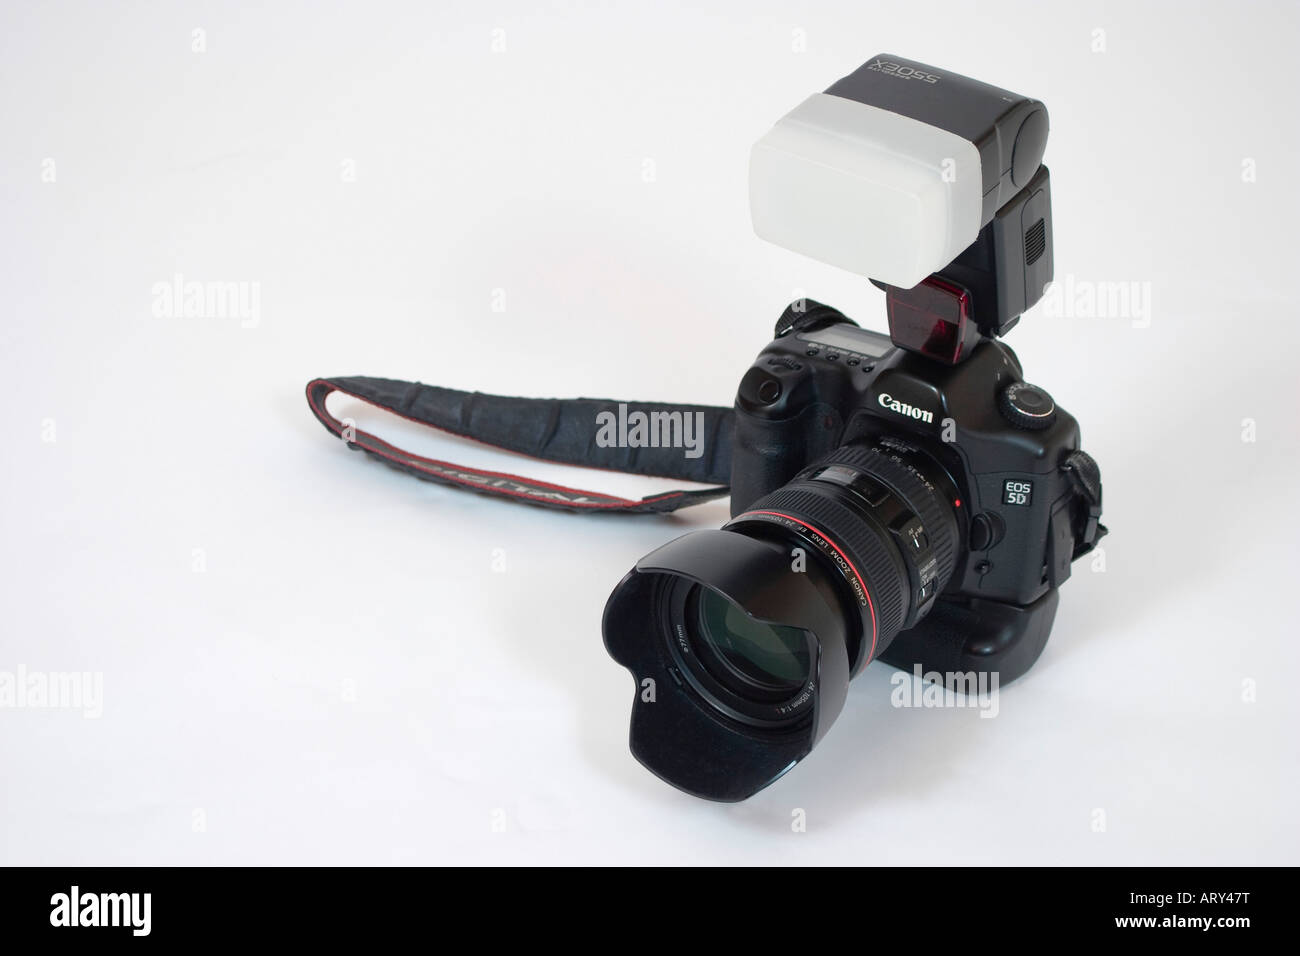 Canon 5D Digital SLR camera, with Canon 550EX speedlight flash gun Stock  Photo - Alamy